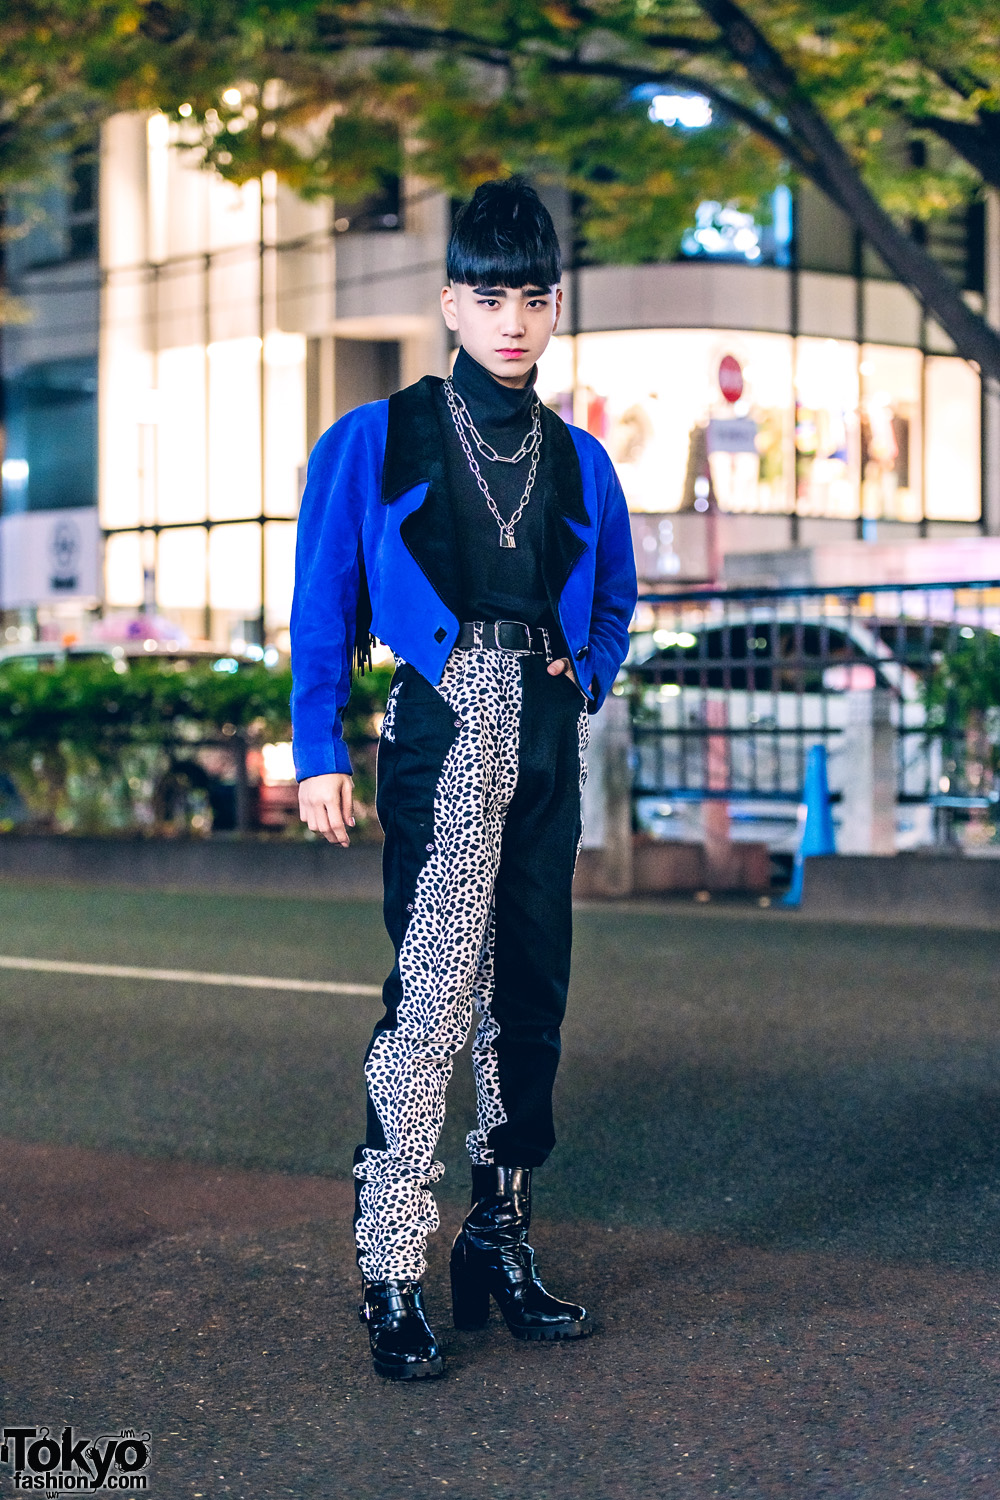 Retro Vintage Streetwear Style in Harajuku w/ RRR Vintage Tuxedo Jacket, Leopard Print Pants, UNIQLO Turtleneck Top & Heeled Boots